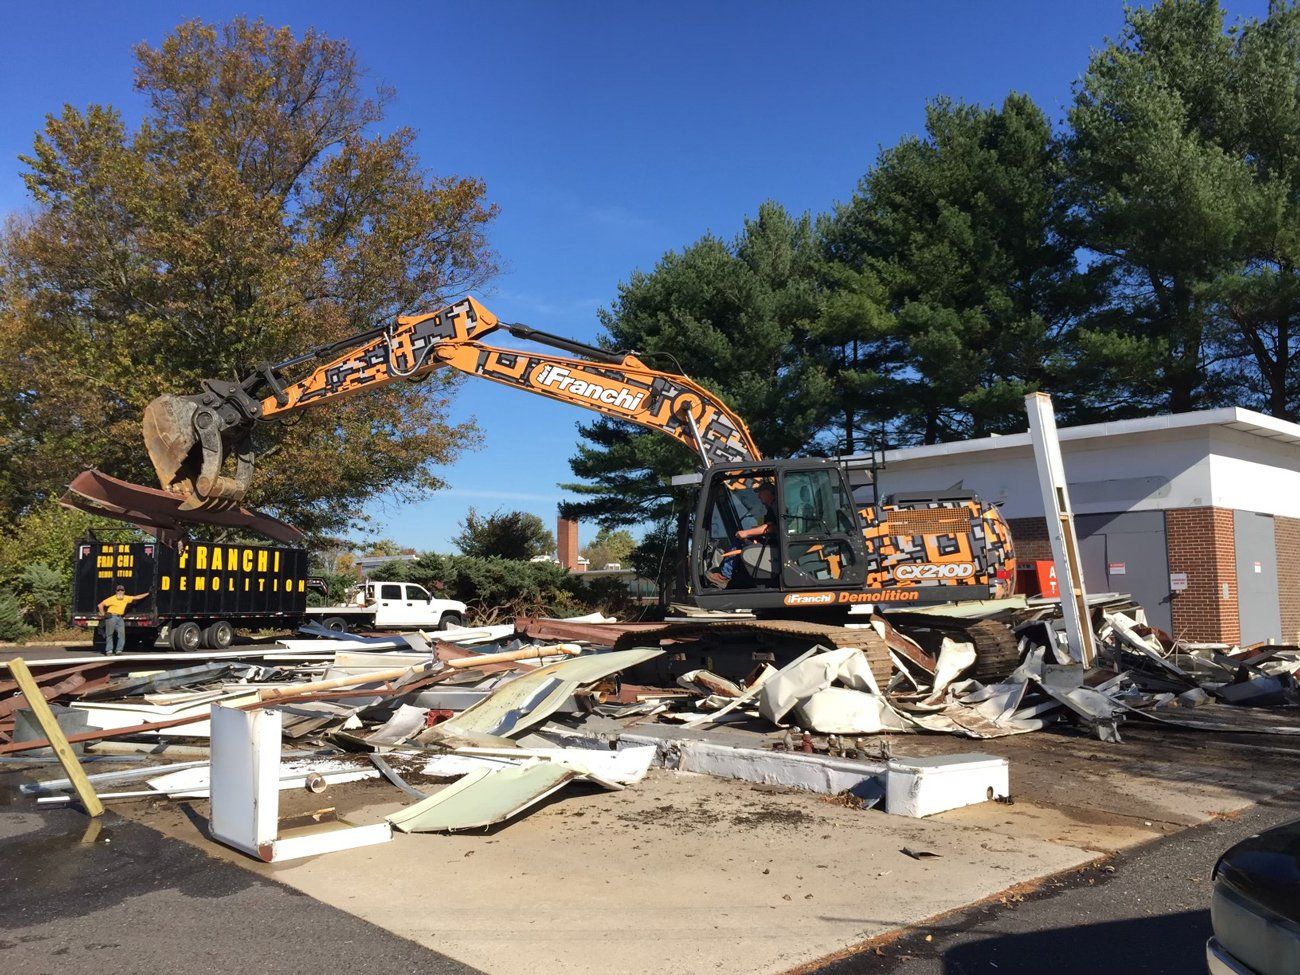 Excavator Separating Scrap Materials — Demolition in Sewell, NJ